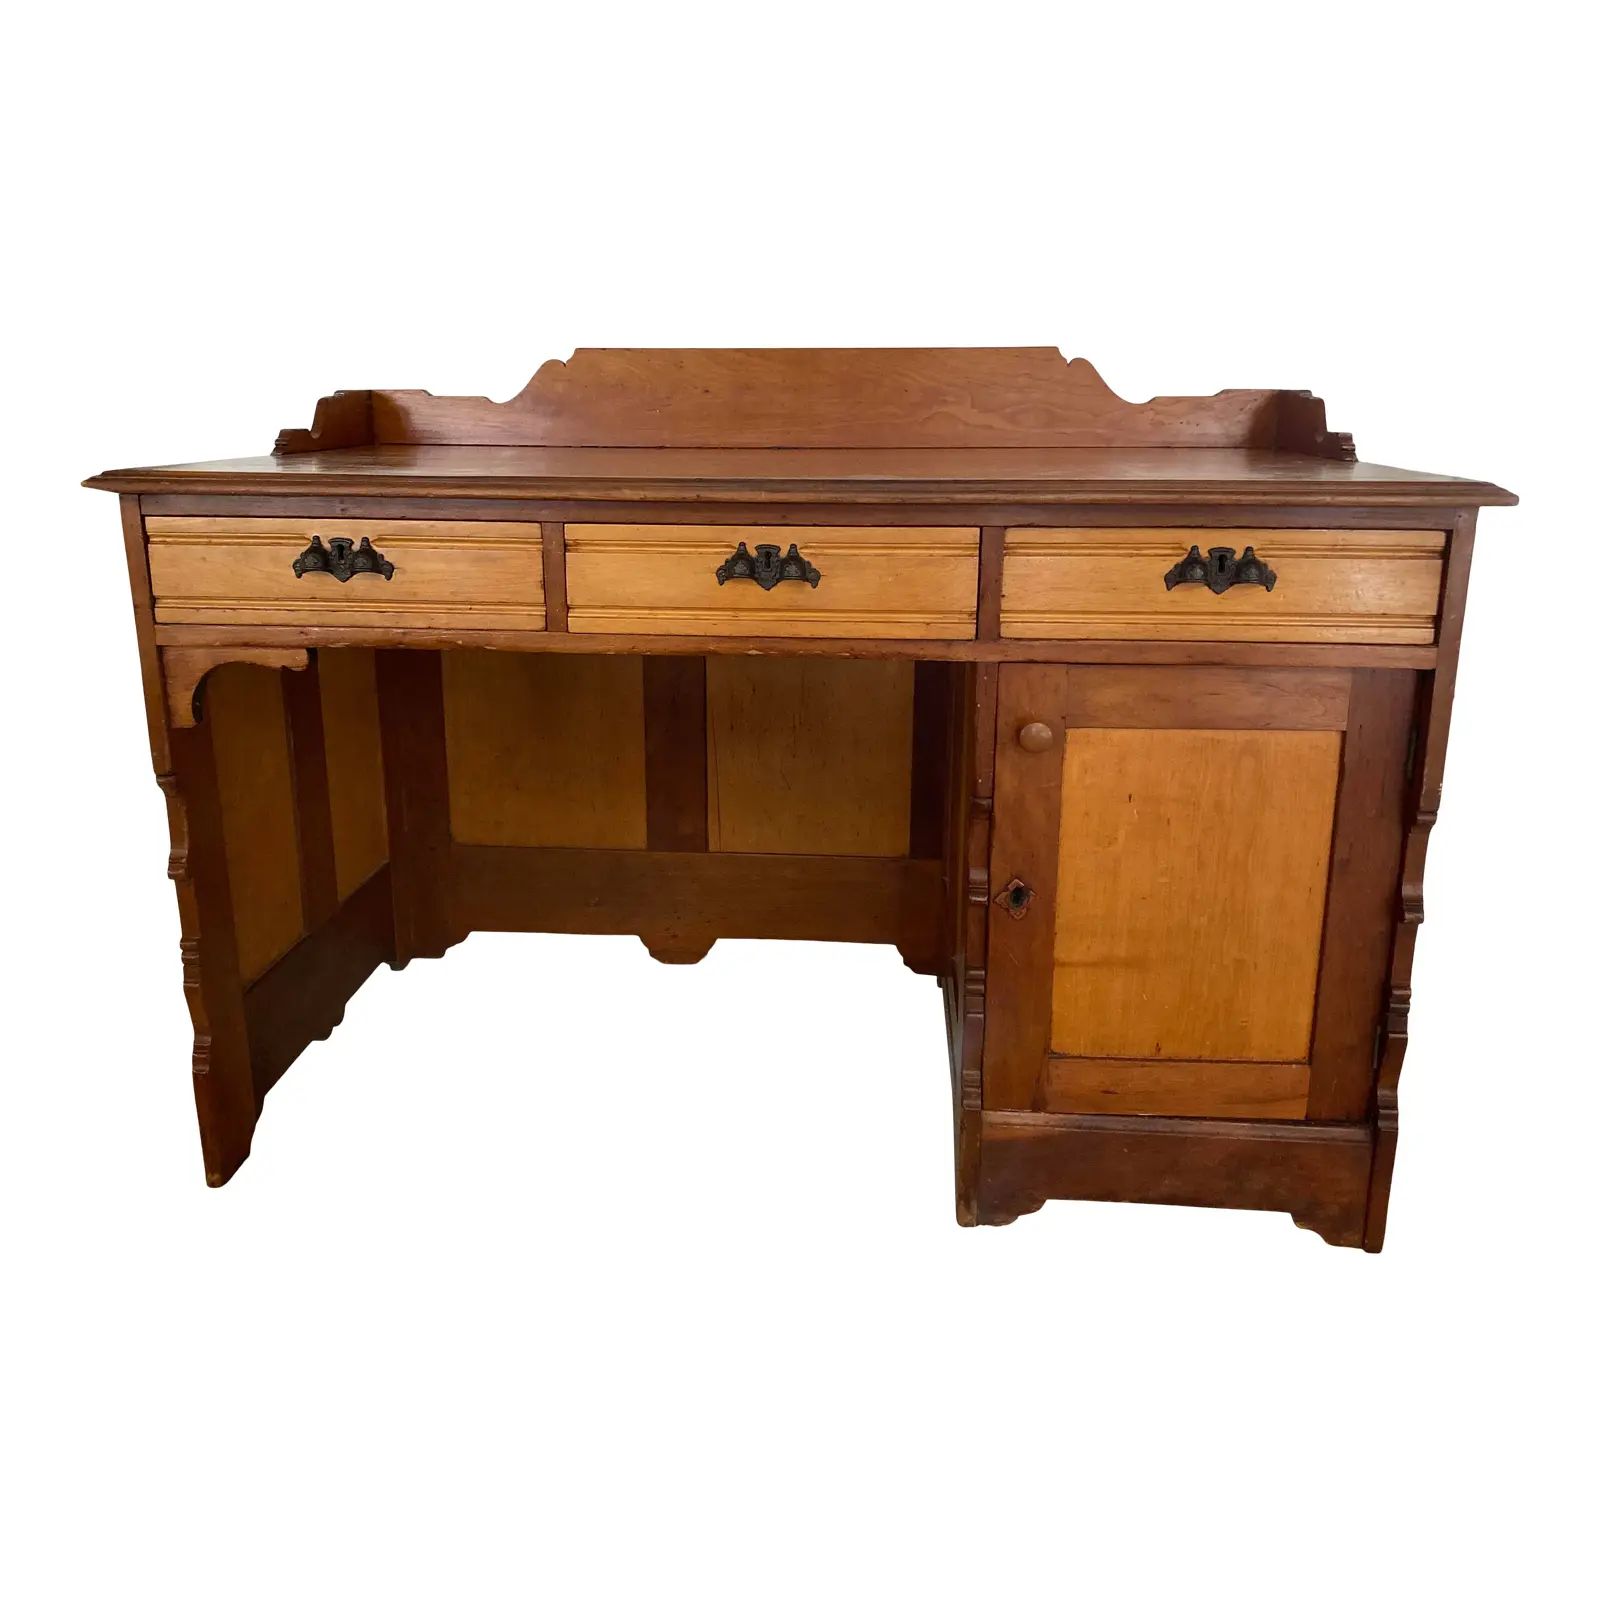 1930s European Wooden Executive Desk | Chairish